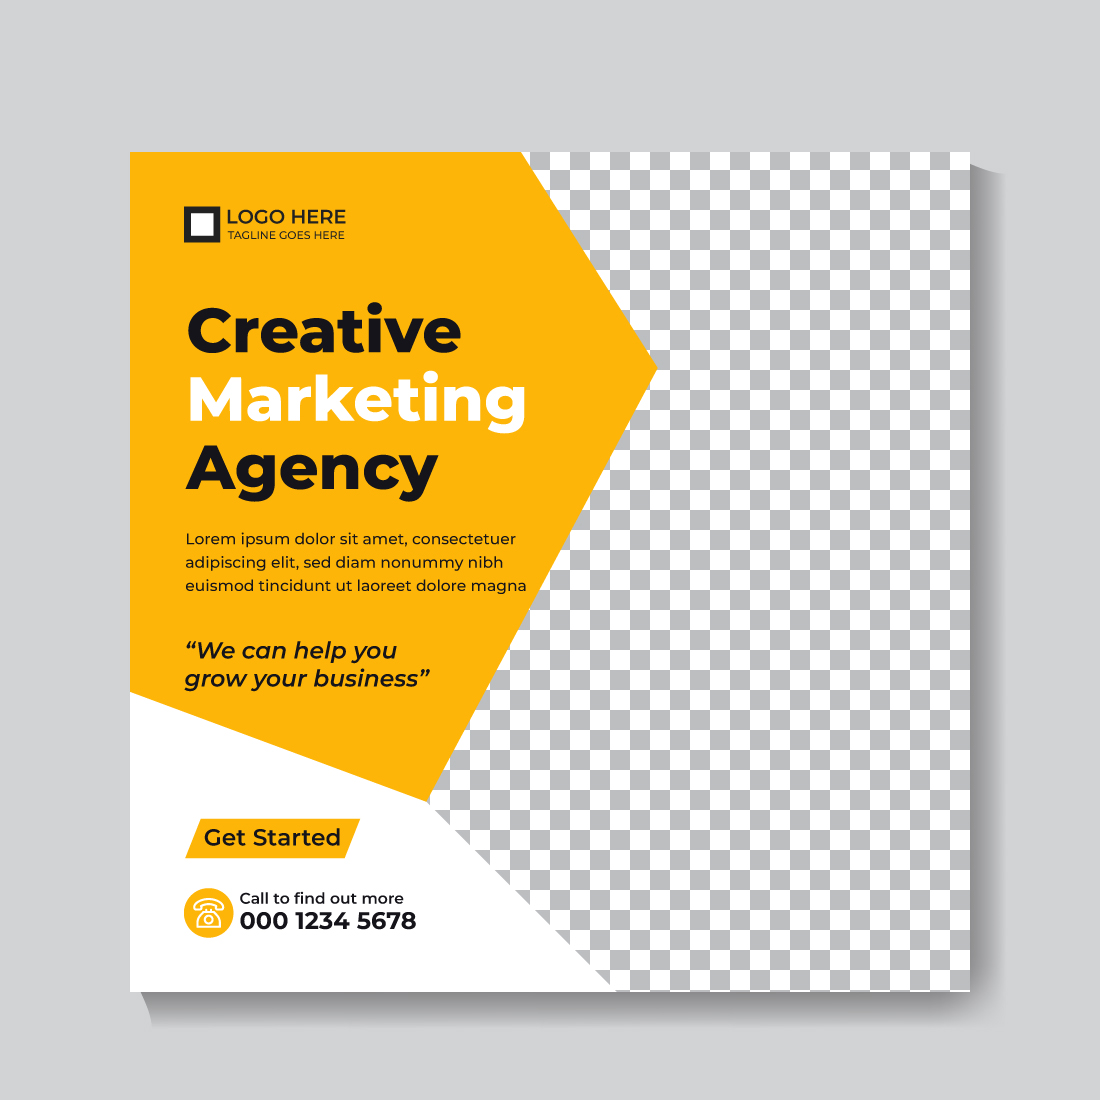 Creative Modern Digital Marketing Social Media Post Design Template main cover